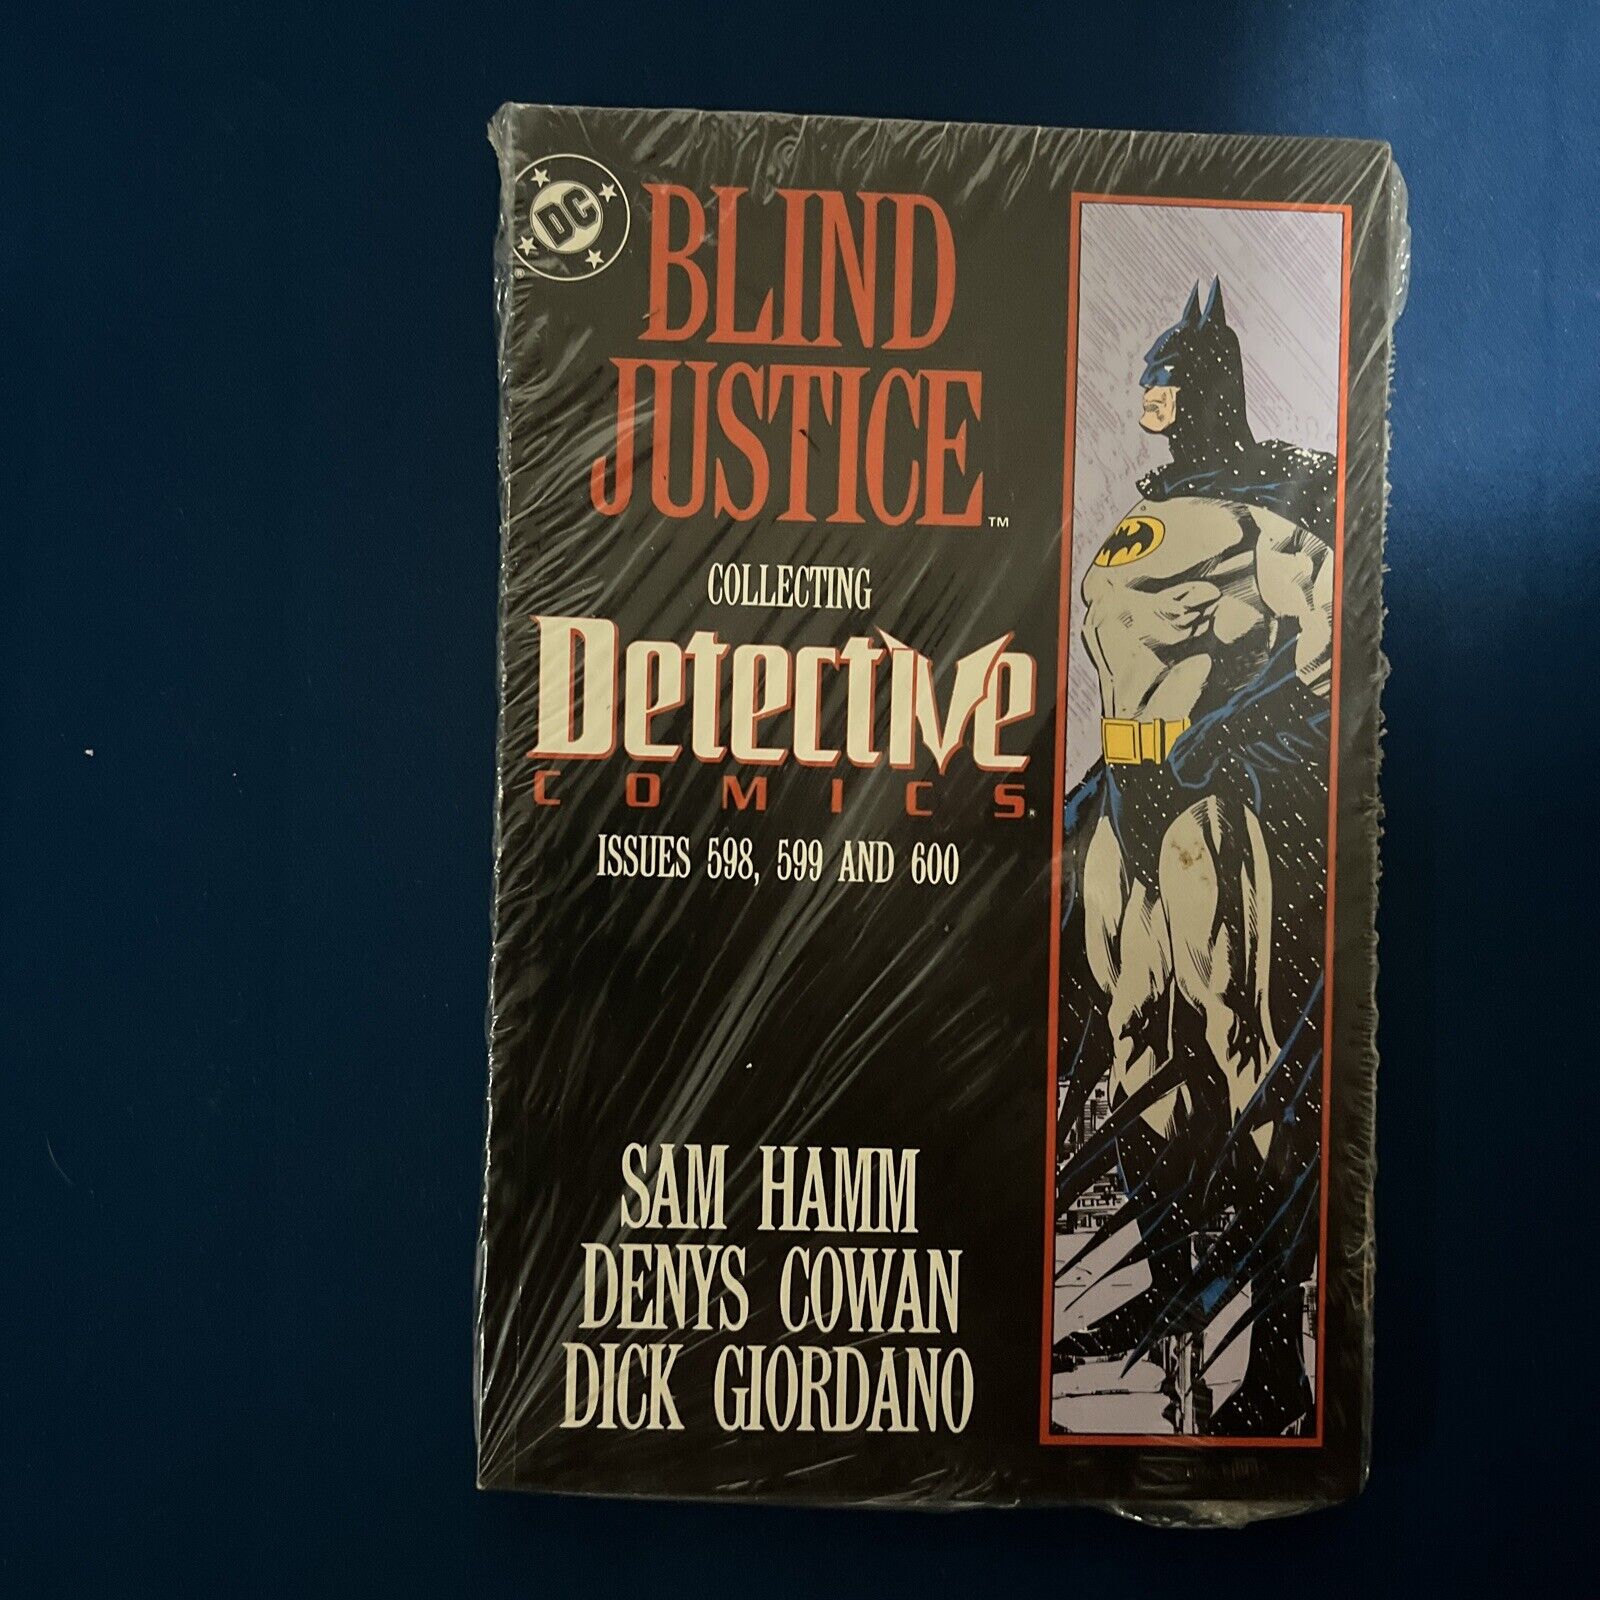 Blind Justice-no # 1989-Collecting Detective comics #598-600-Batman SEALED NEW